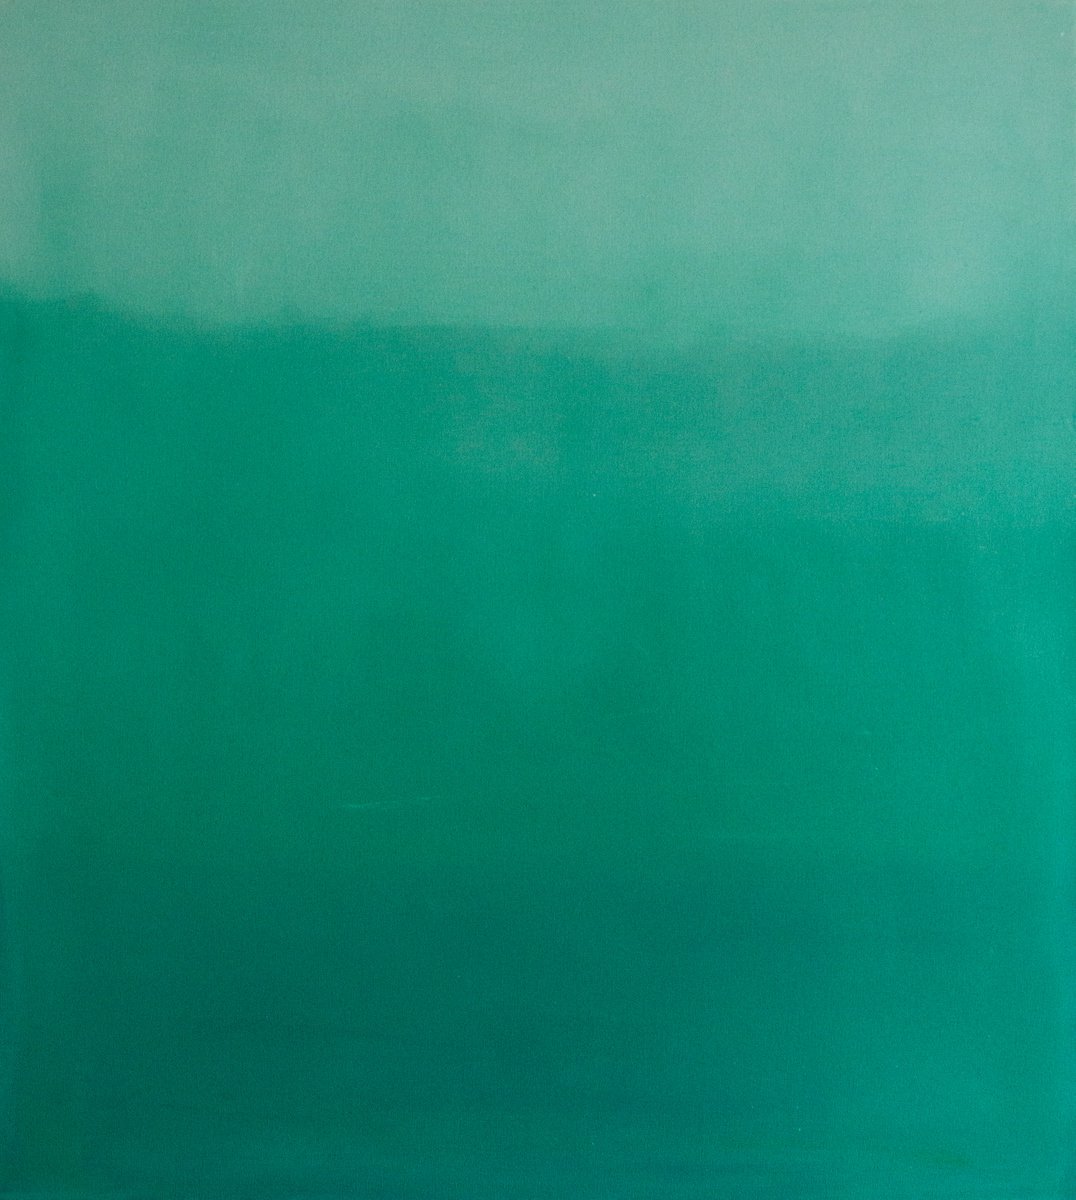 Green Gradient no.2 by Petr Johan Marek